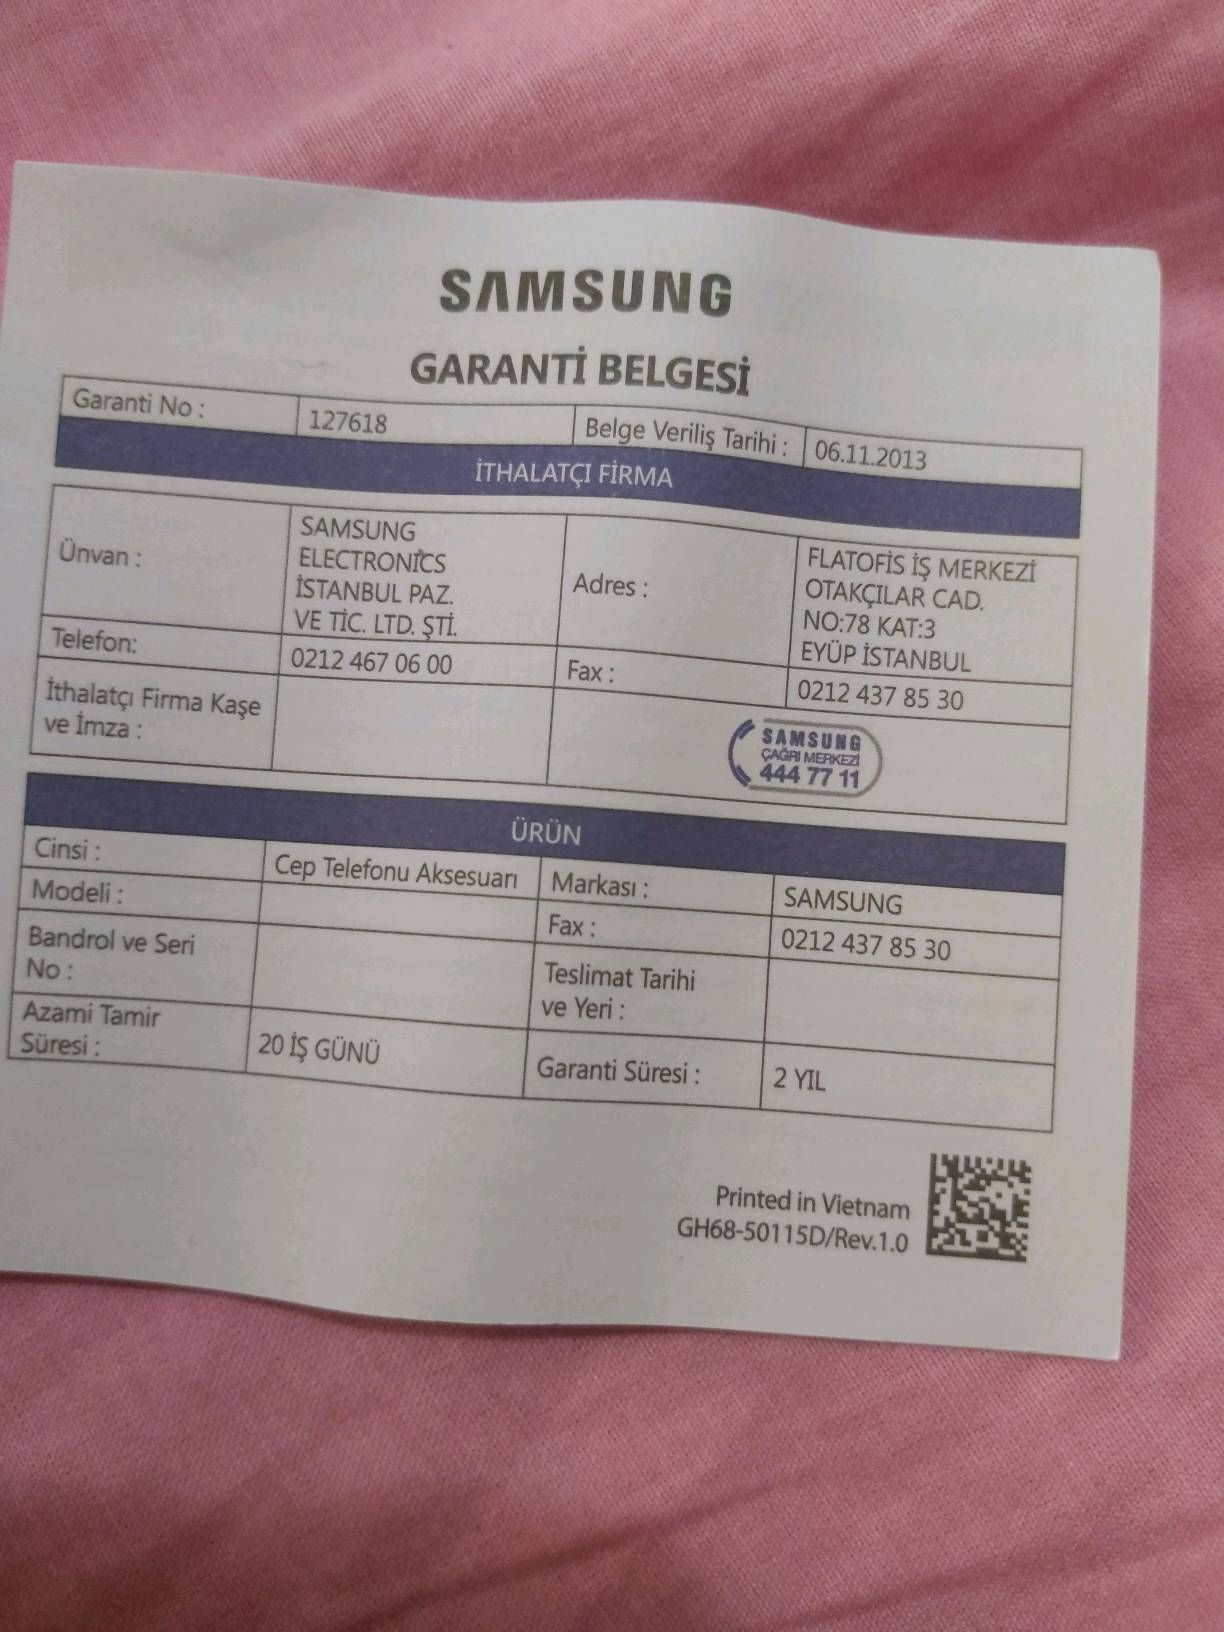 Solved: Garanti belgesi - Samsung Members